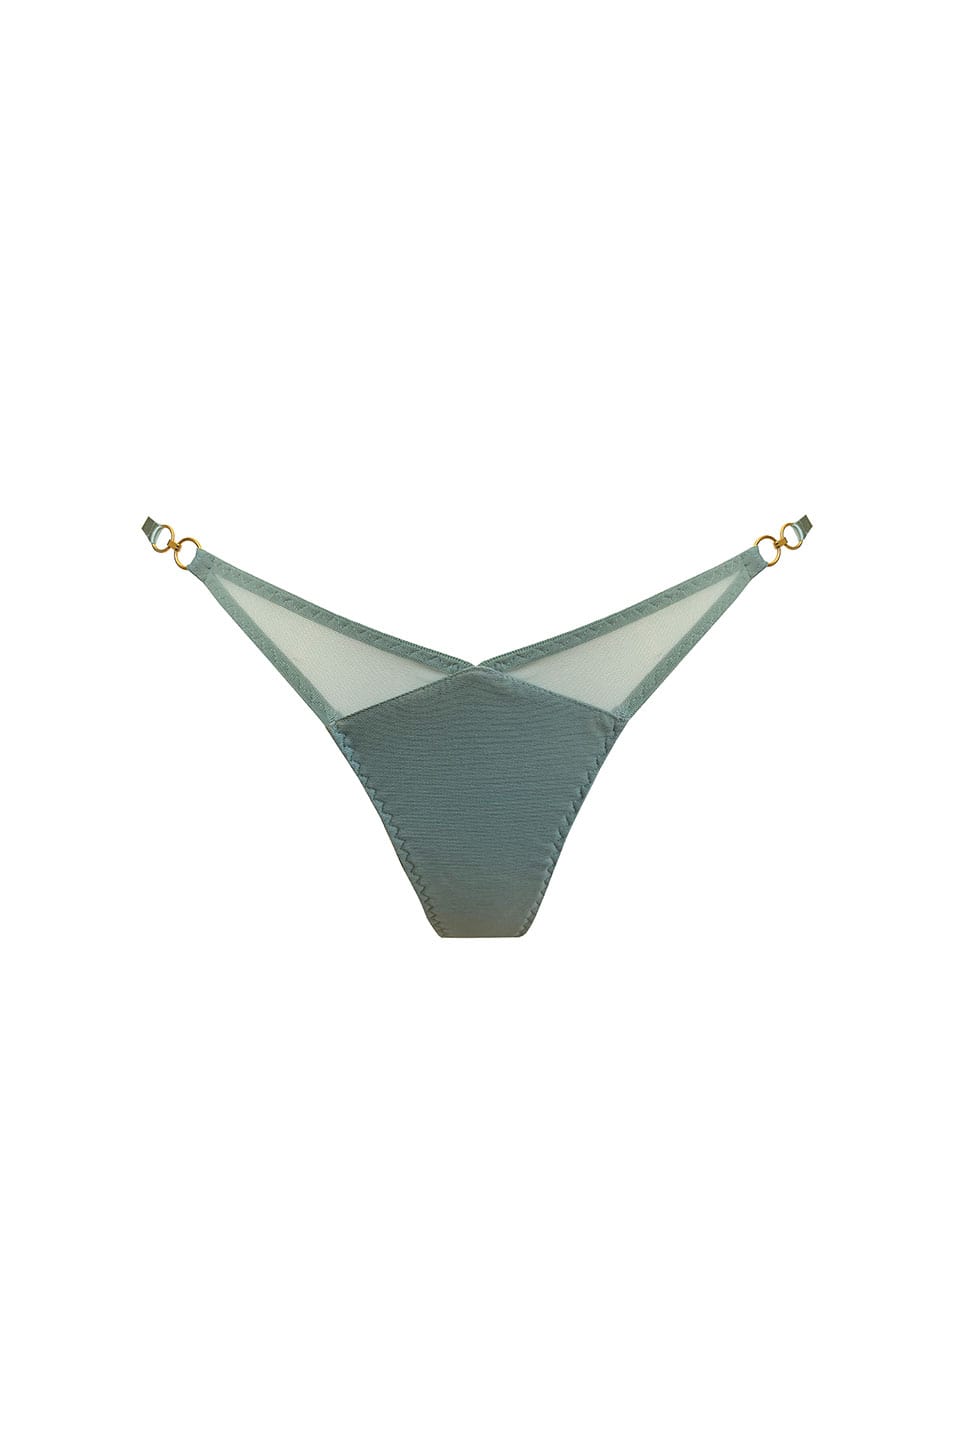 Shop online trendy Sage Undergarments from Atelier Bordelle Fashion designer. Product gallery 1